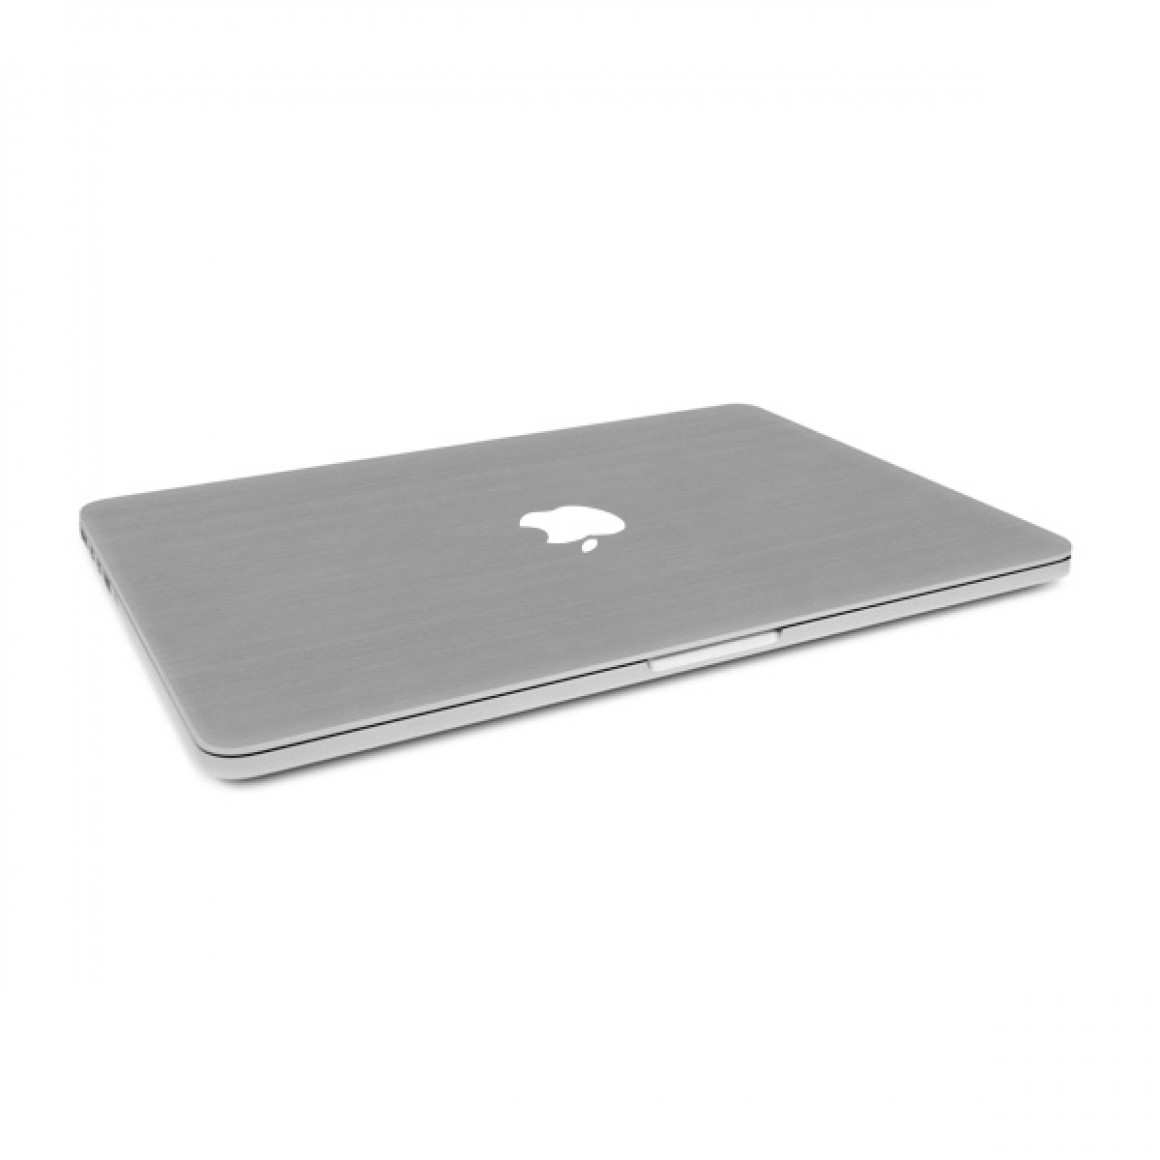 Skin Adesivo Estampa Aço escovado Cima E Base Para Macbook Pro 13 A1278